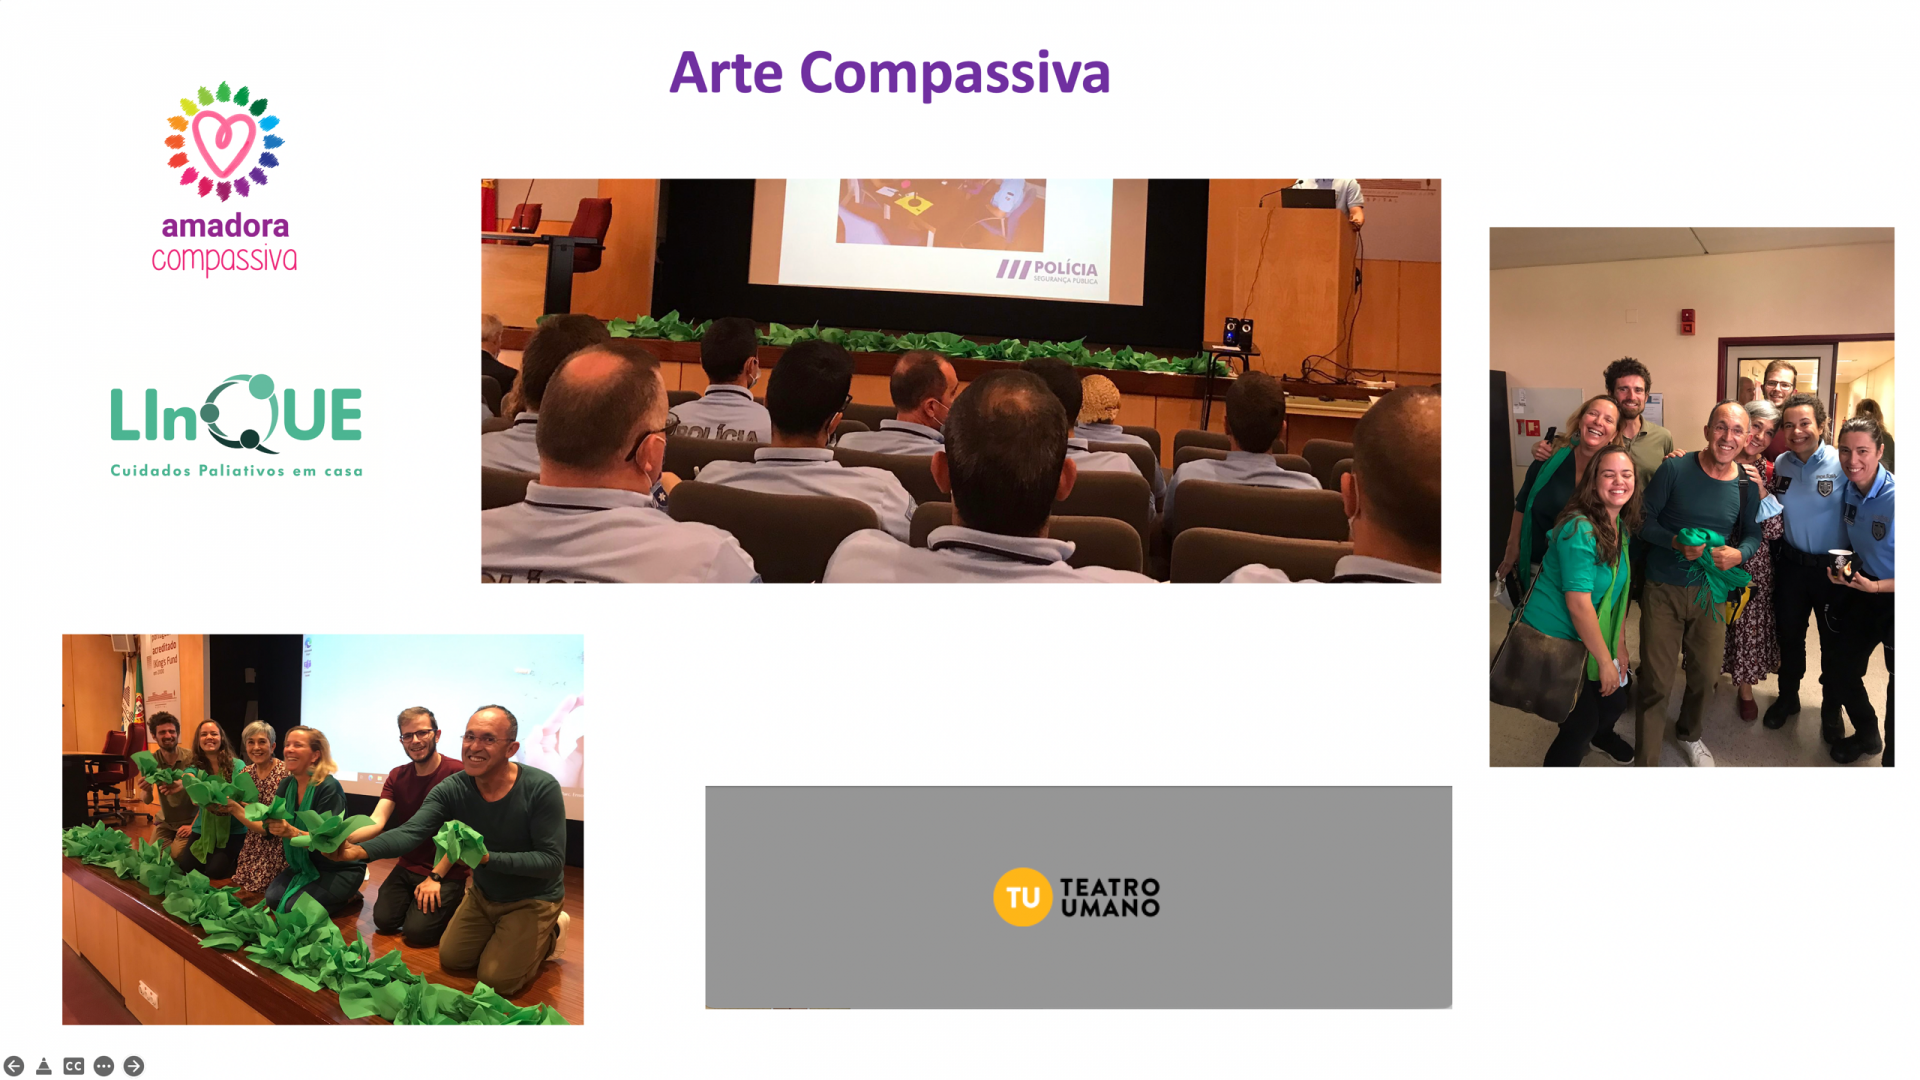 Arte compassiva - Amadora compassiva